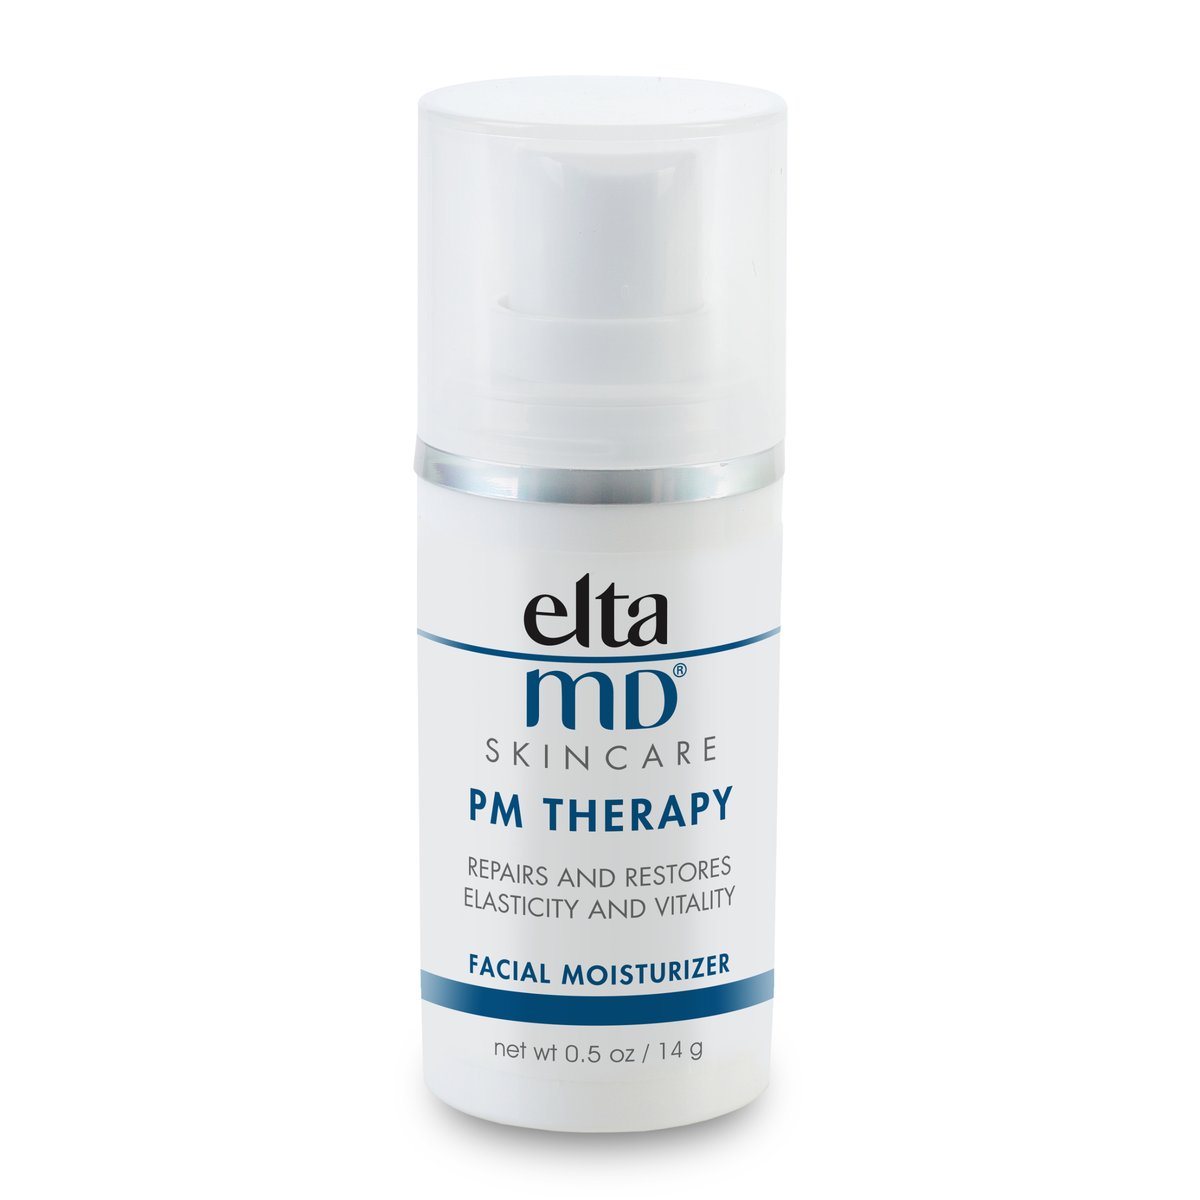 EltaMD пробен размер PM Therapy овлажнител за лице (0.5 oz)